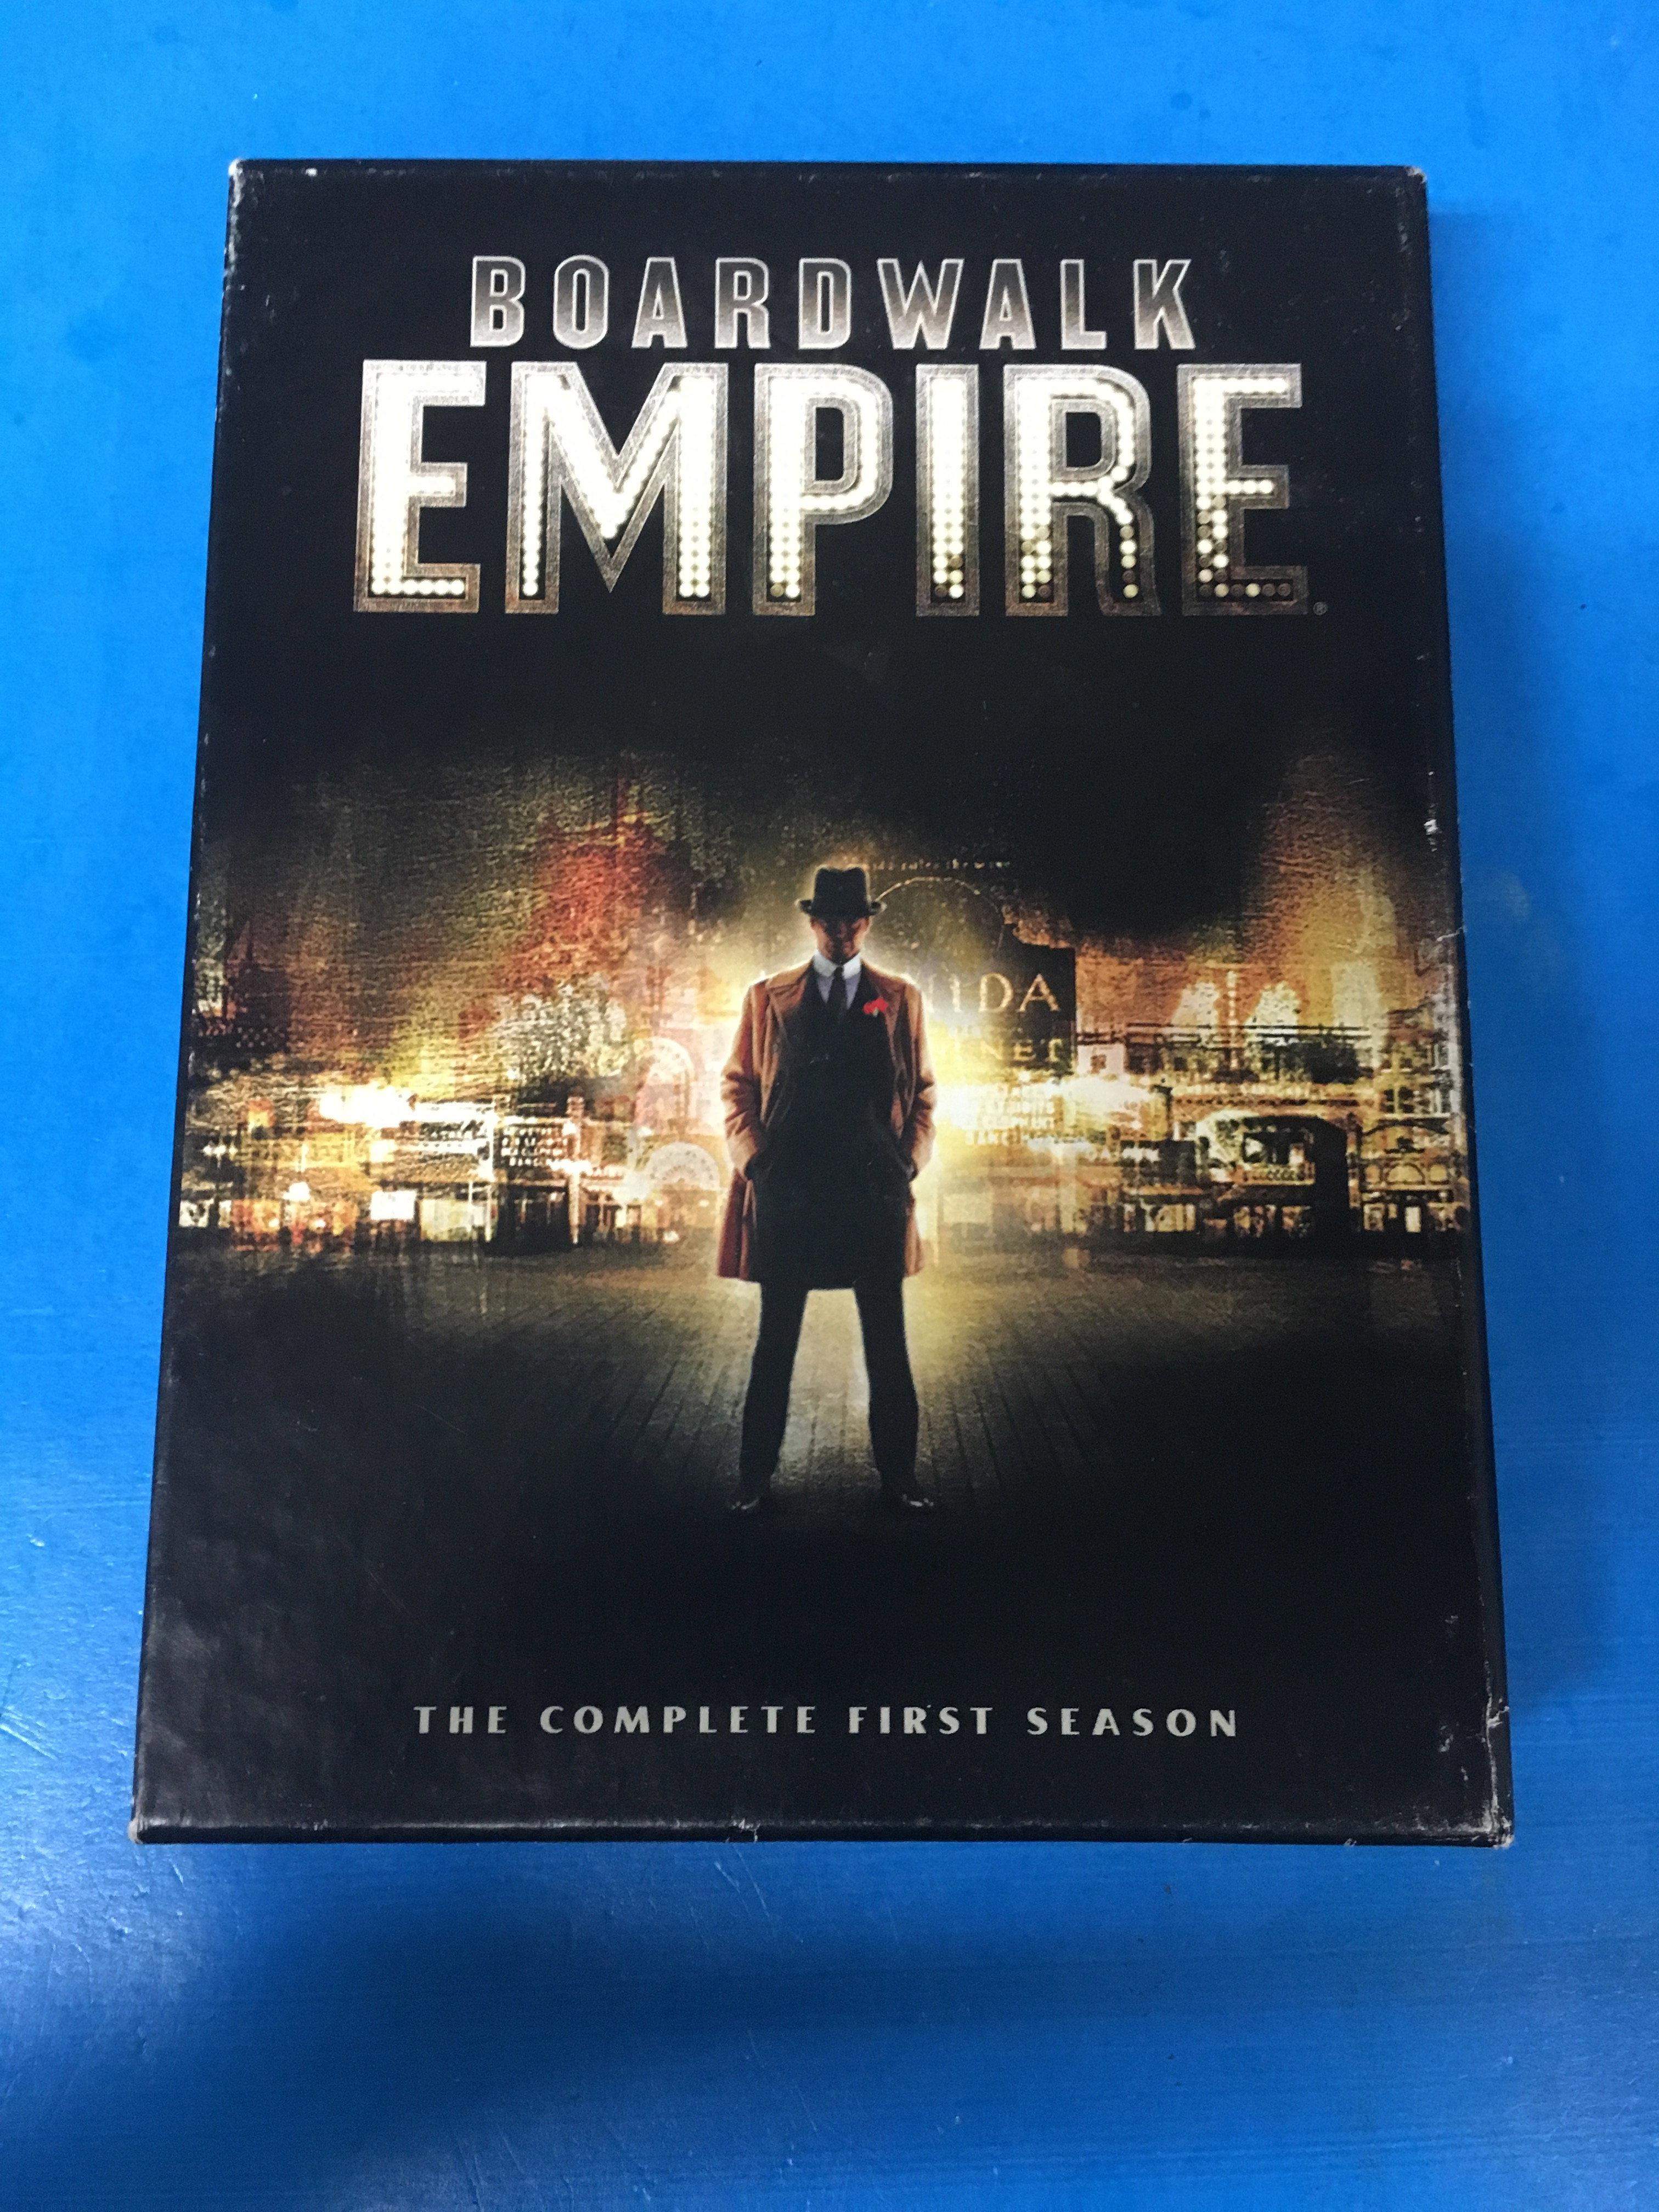 Boardwalk Empire - The Complete First Season DVD Box Set